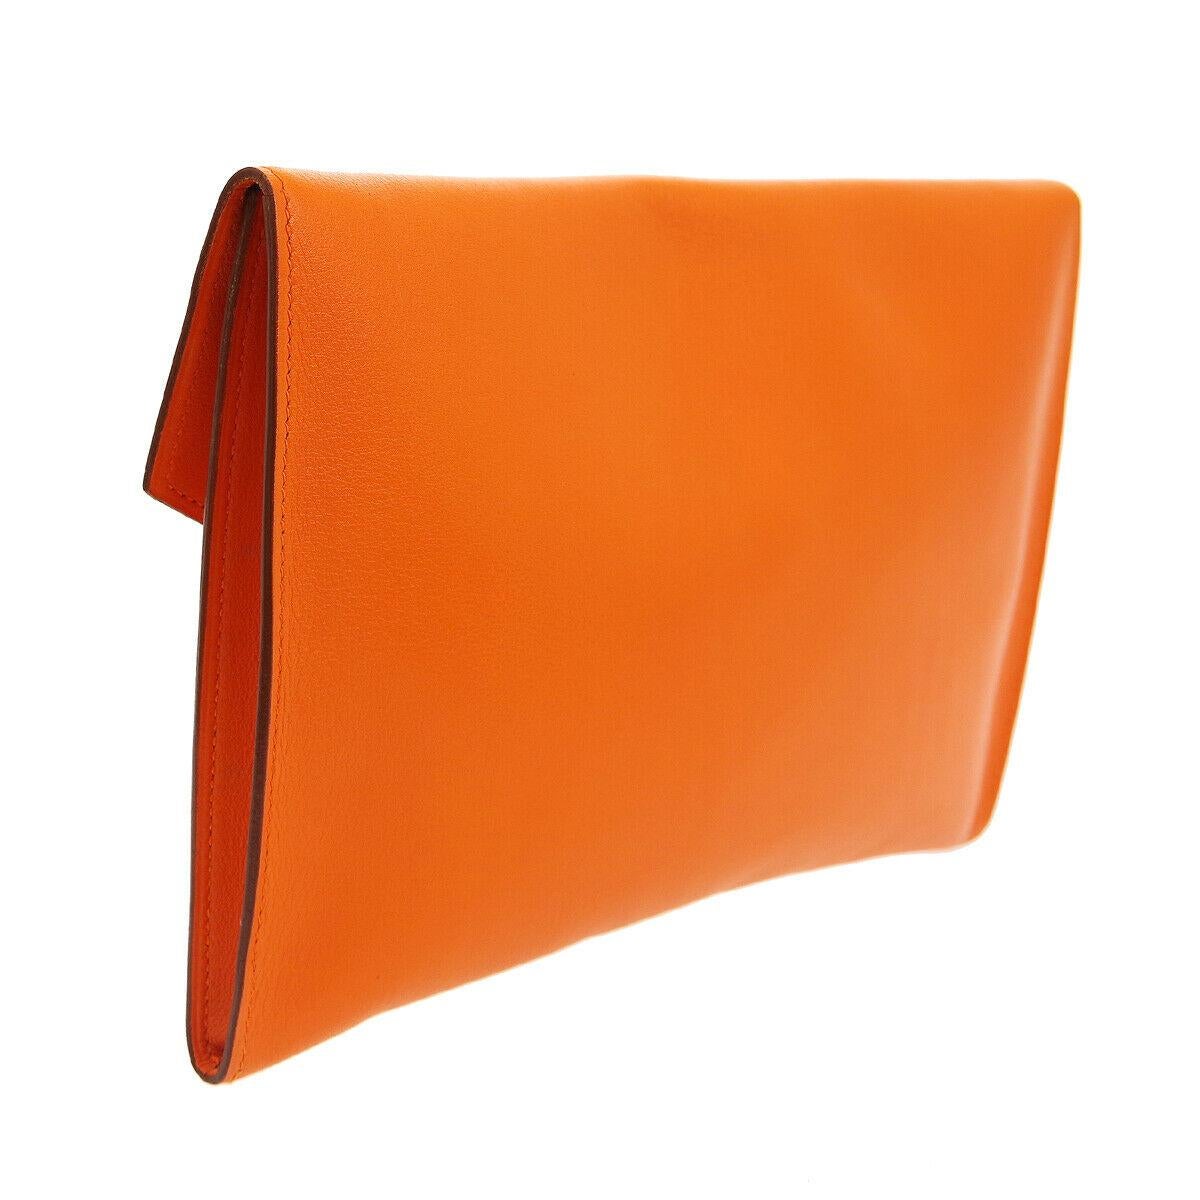 orange leather clutch